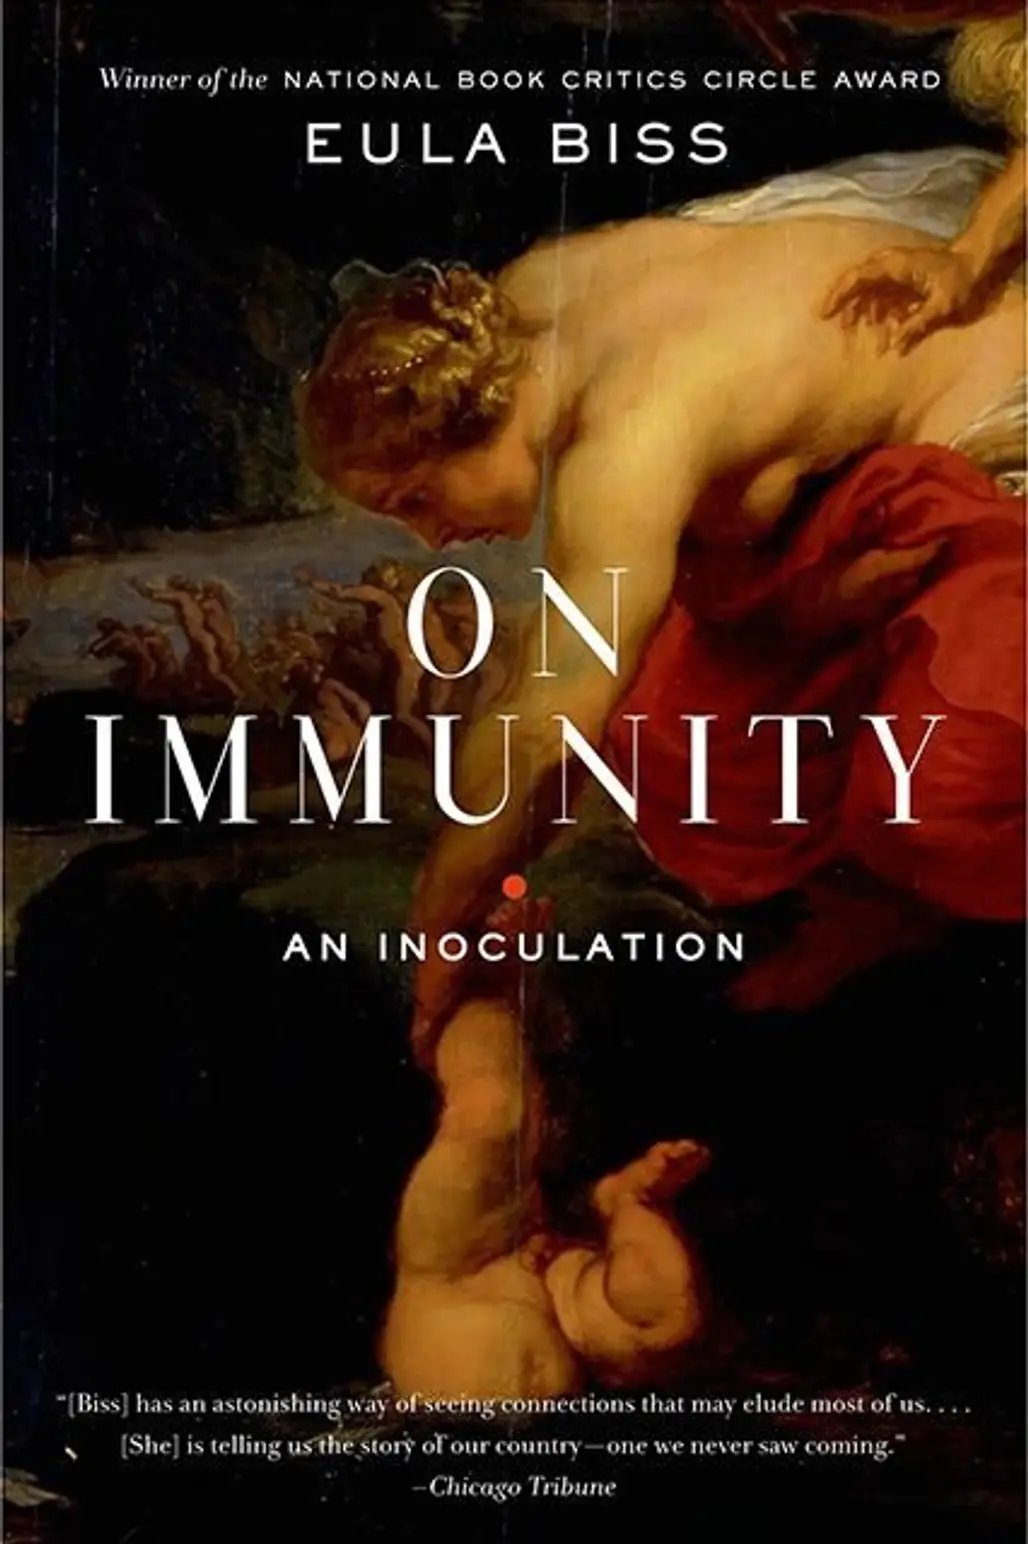 On Immunity by Eula Bliss